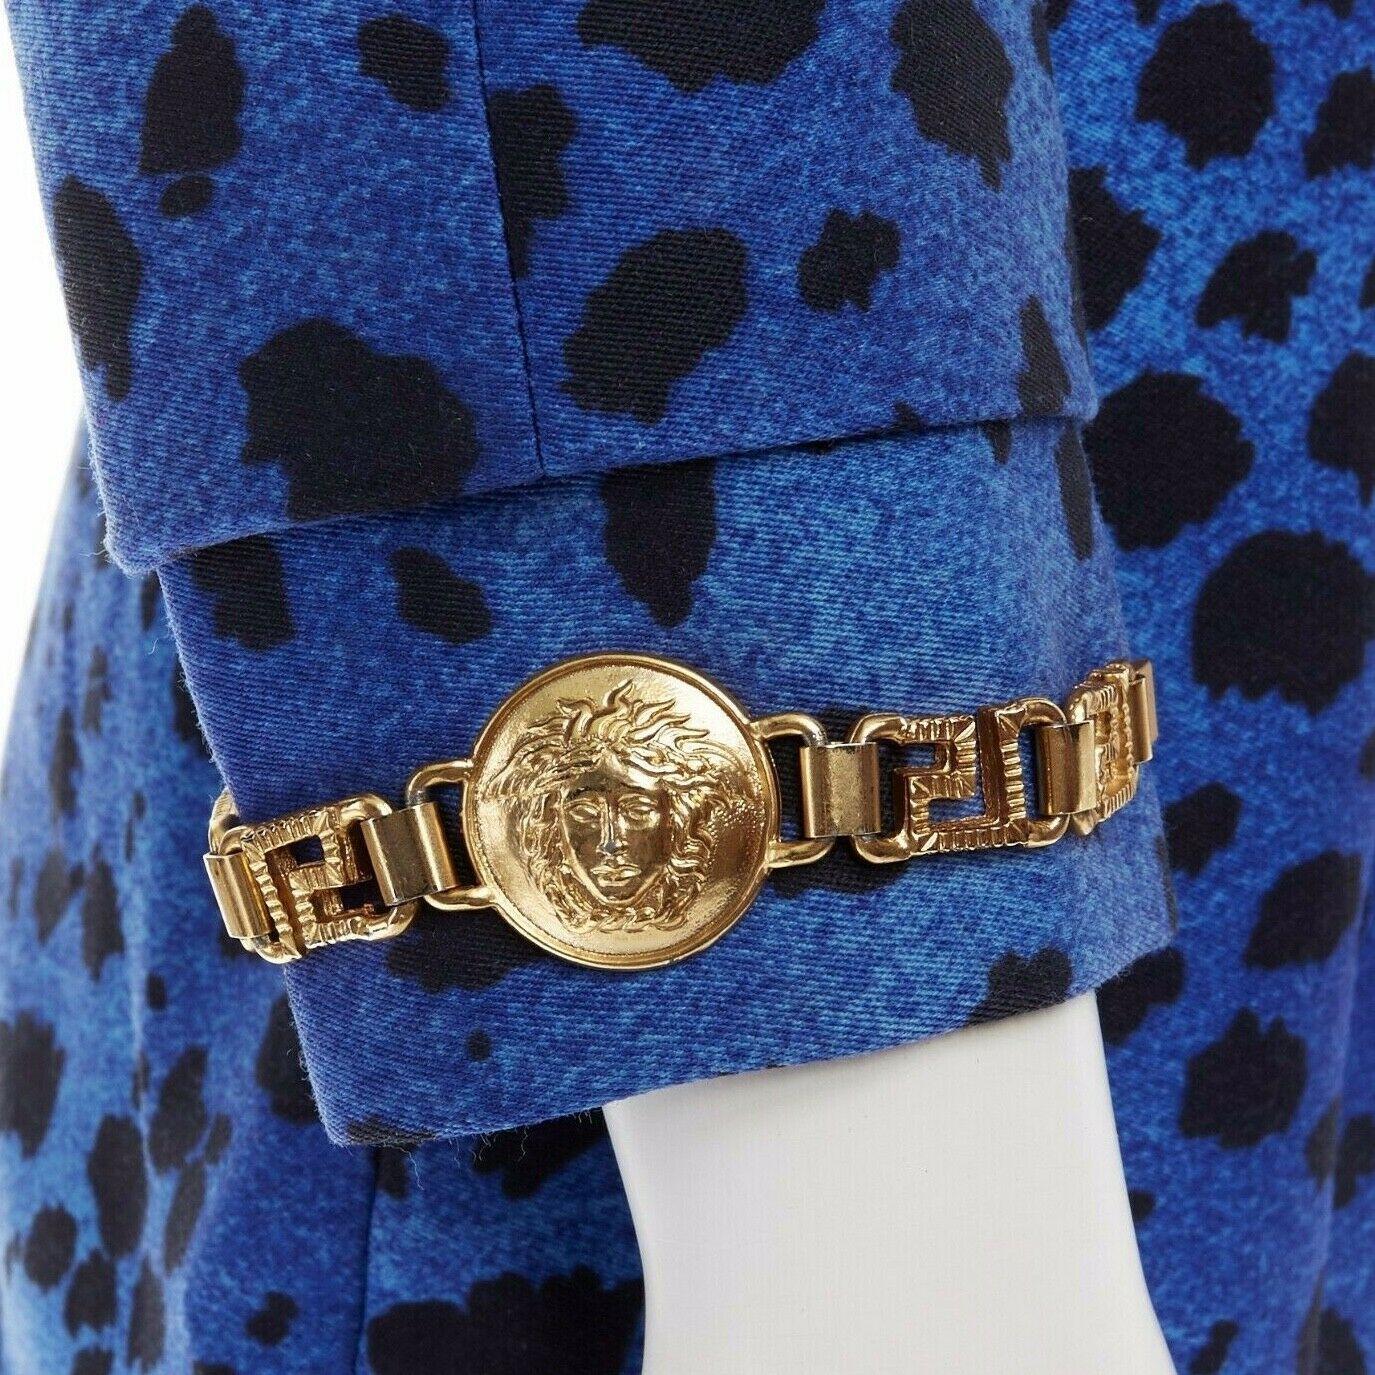 GIANNI VERSACE gold baroque print blue leopard Medusa button jacket skirt set XS
GIANNI VERSACE VINTAGE
WOOL . 
GOLD BAROQUE PRINT . 
BLUE LEOPARD PRINT BASE . 
OVERSIZED MEDUSA HEAD GOLD MEDALLION BUTTON . 
COLLARLESS . 
BLACK TRIMMING ALONG FRONT